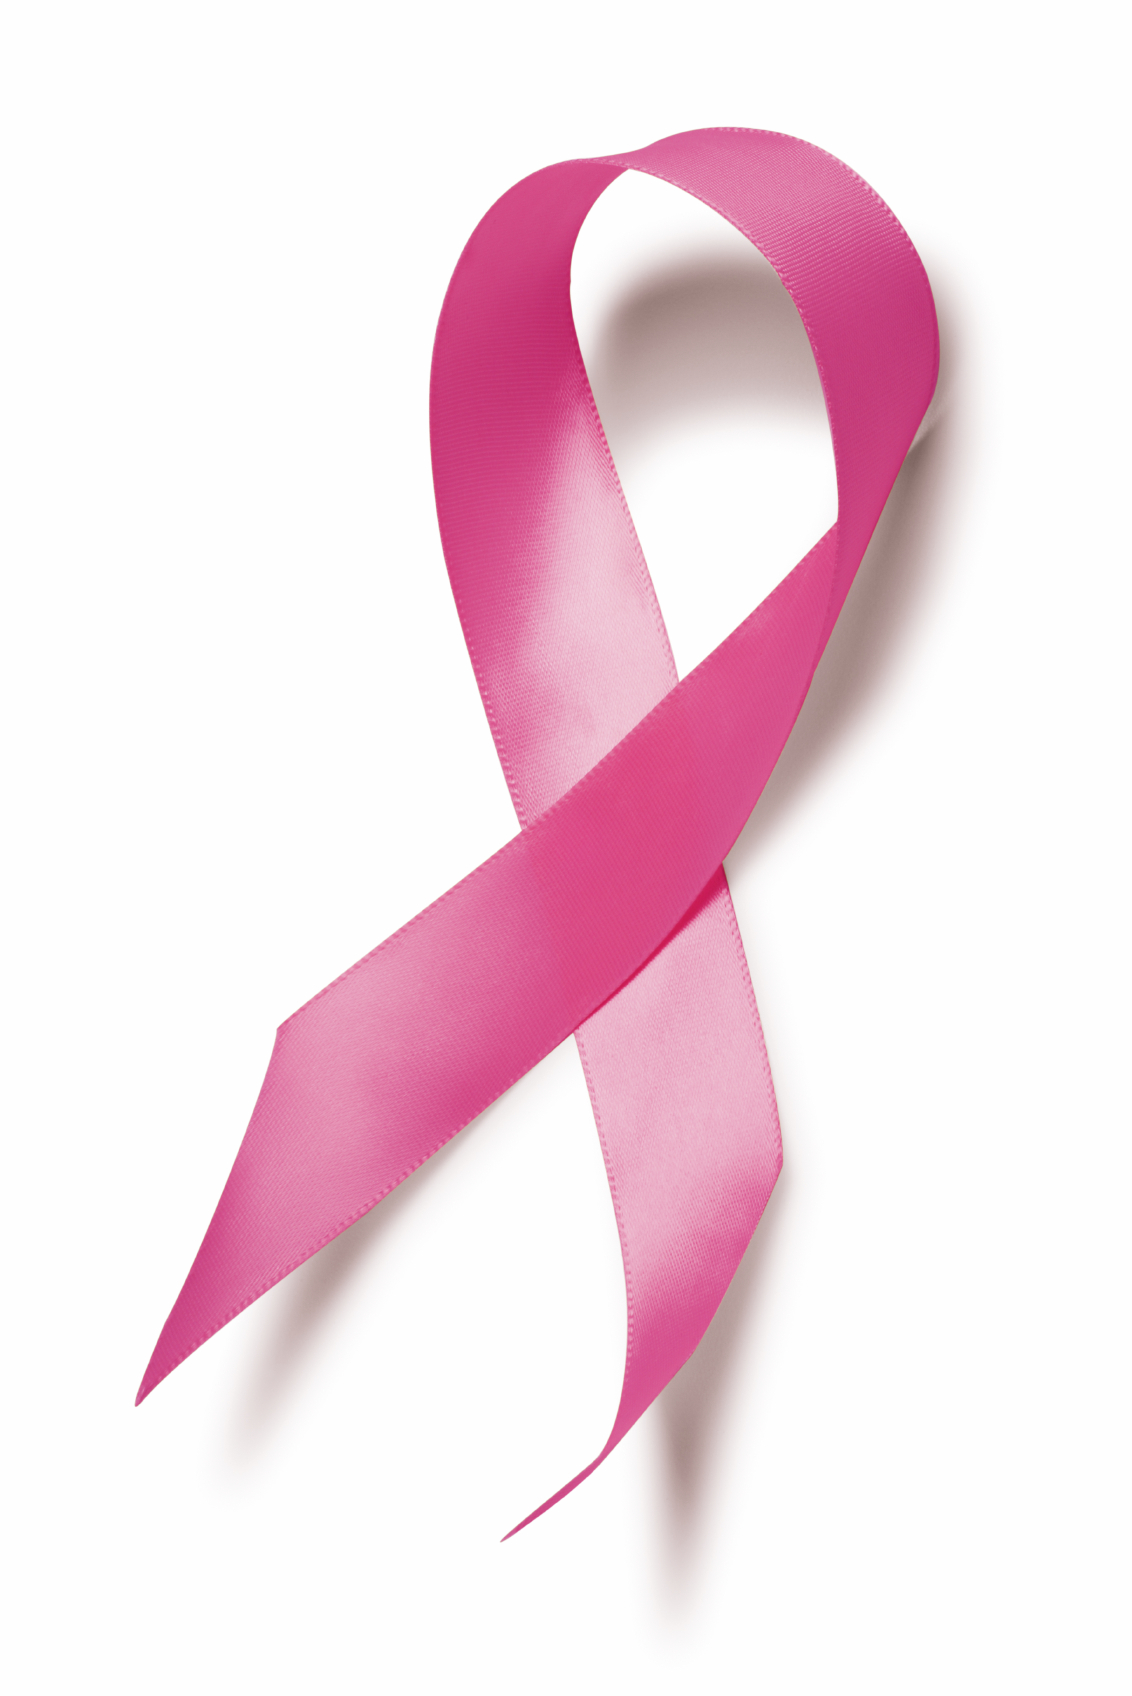 Free Printable Breast Cancer Awareness Ribbons